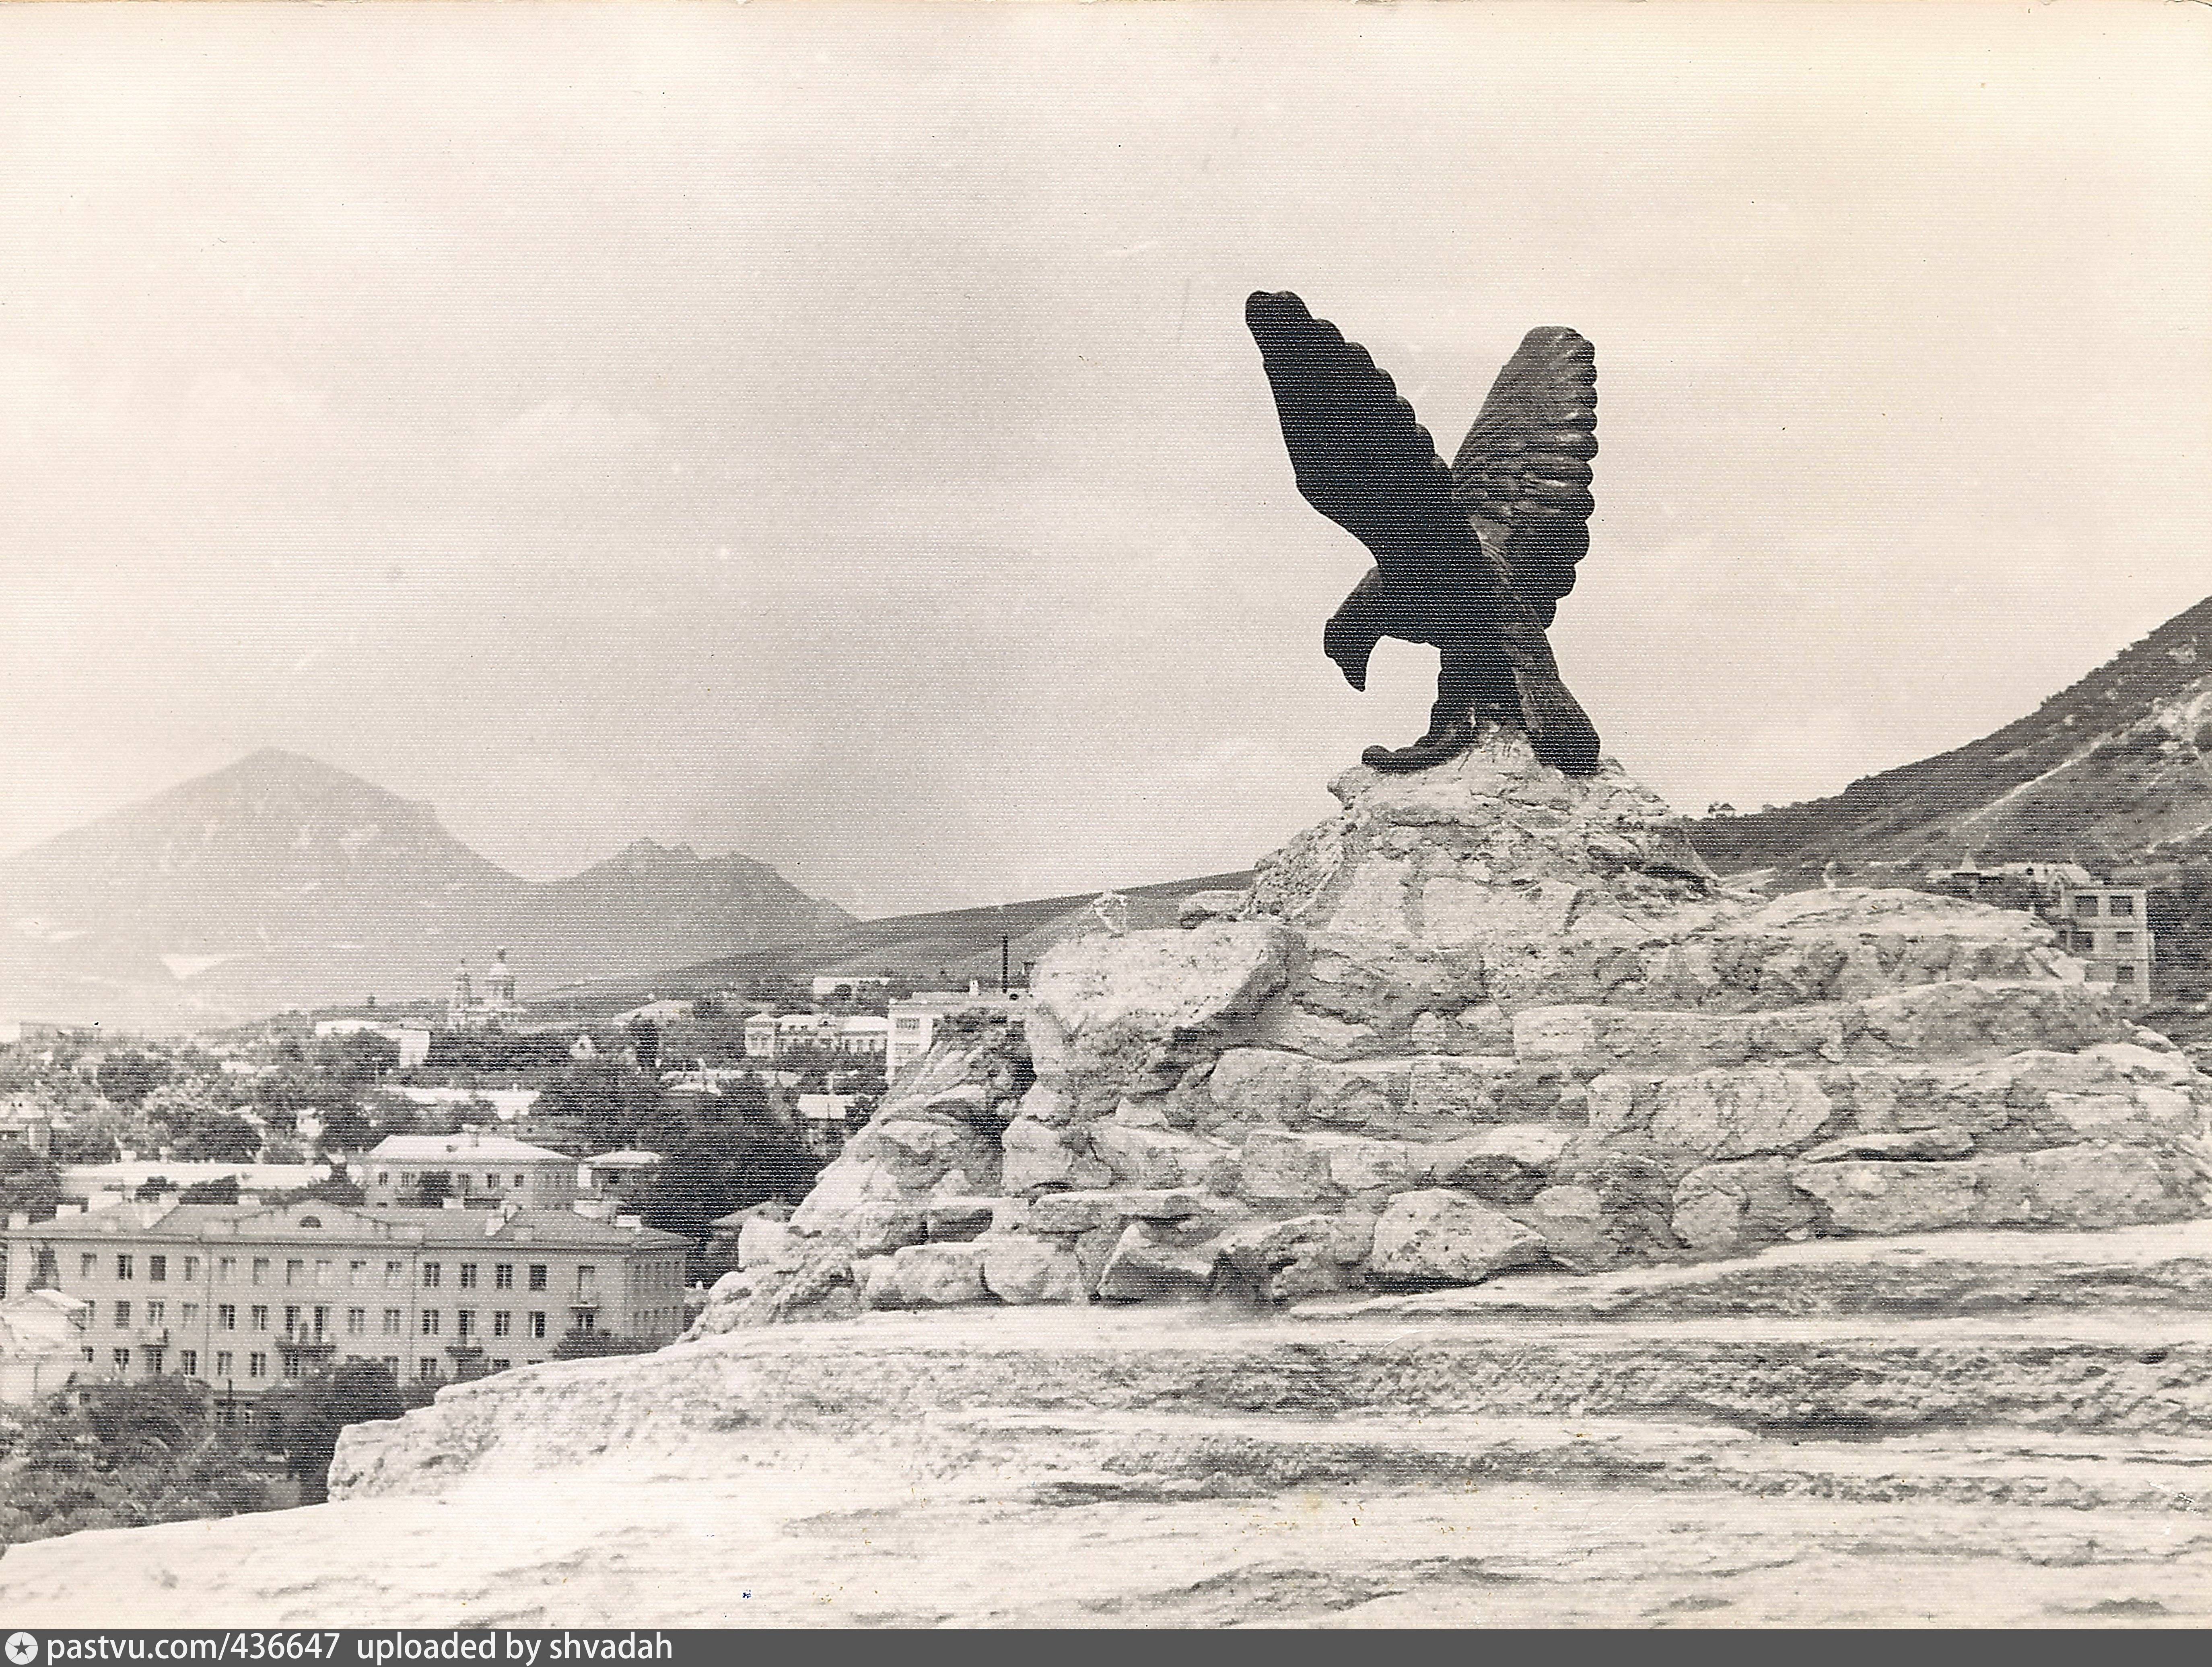 Орёл на горячей горе как символ… — скульптура орла